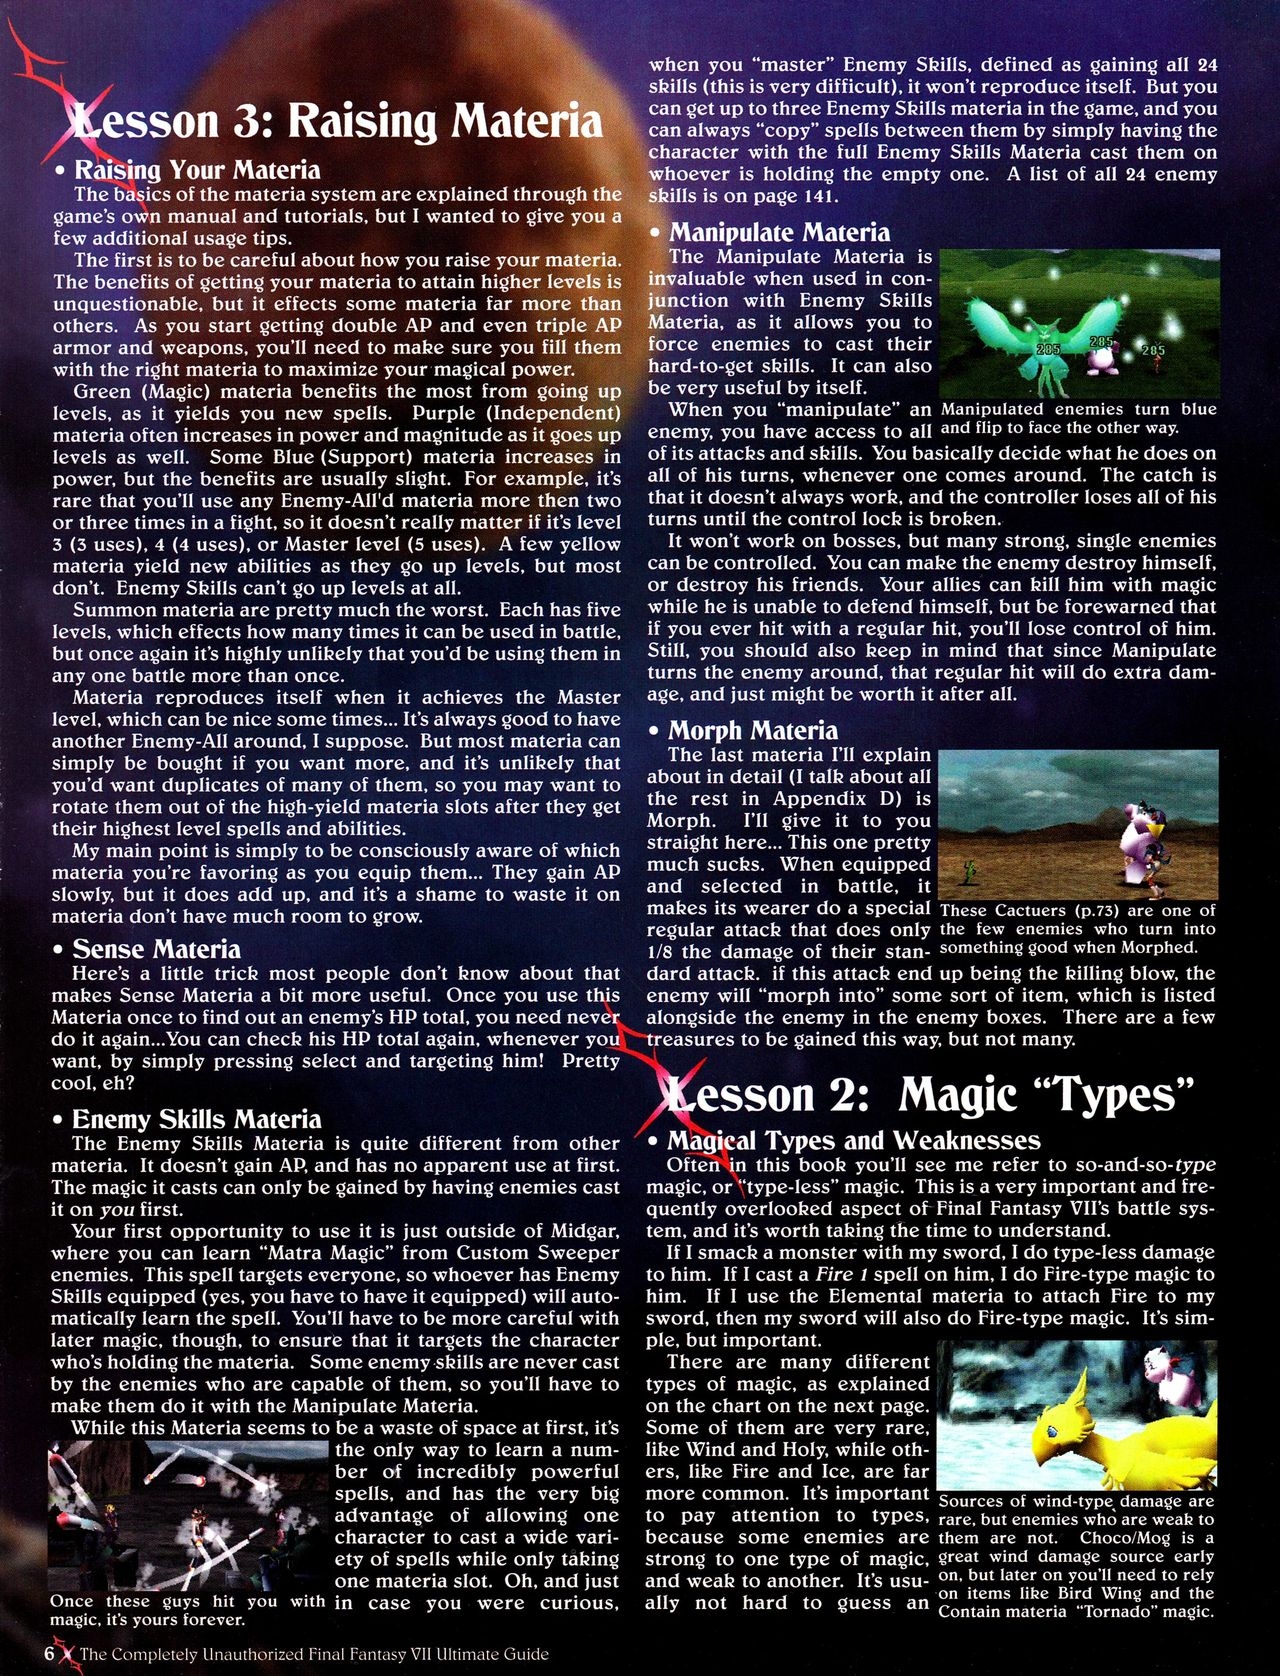 Final Fantasy VII Versus Guide 7